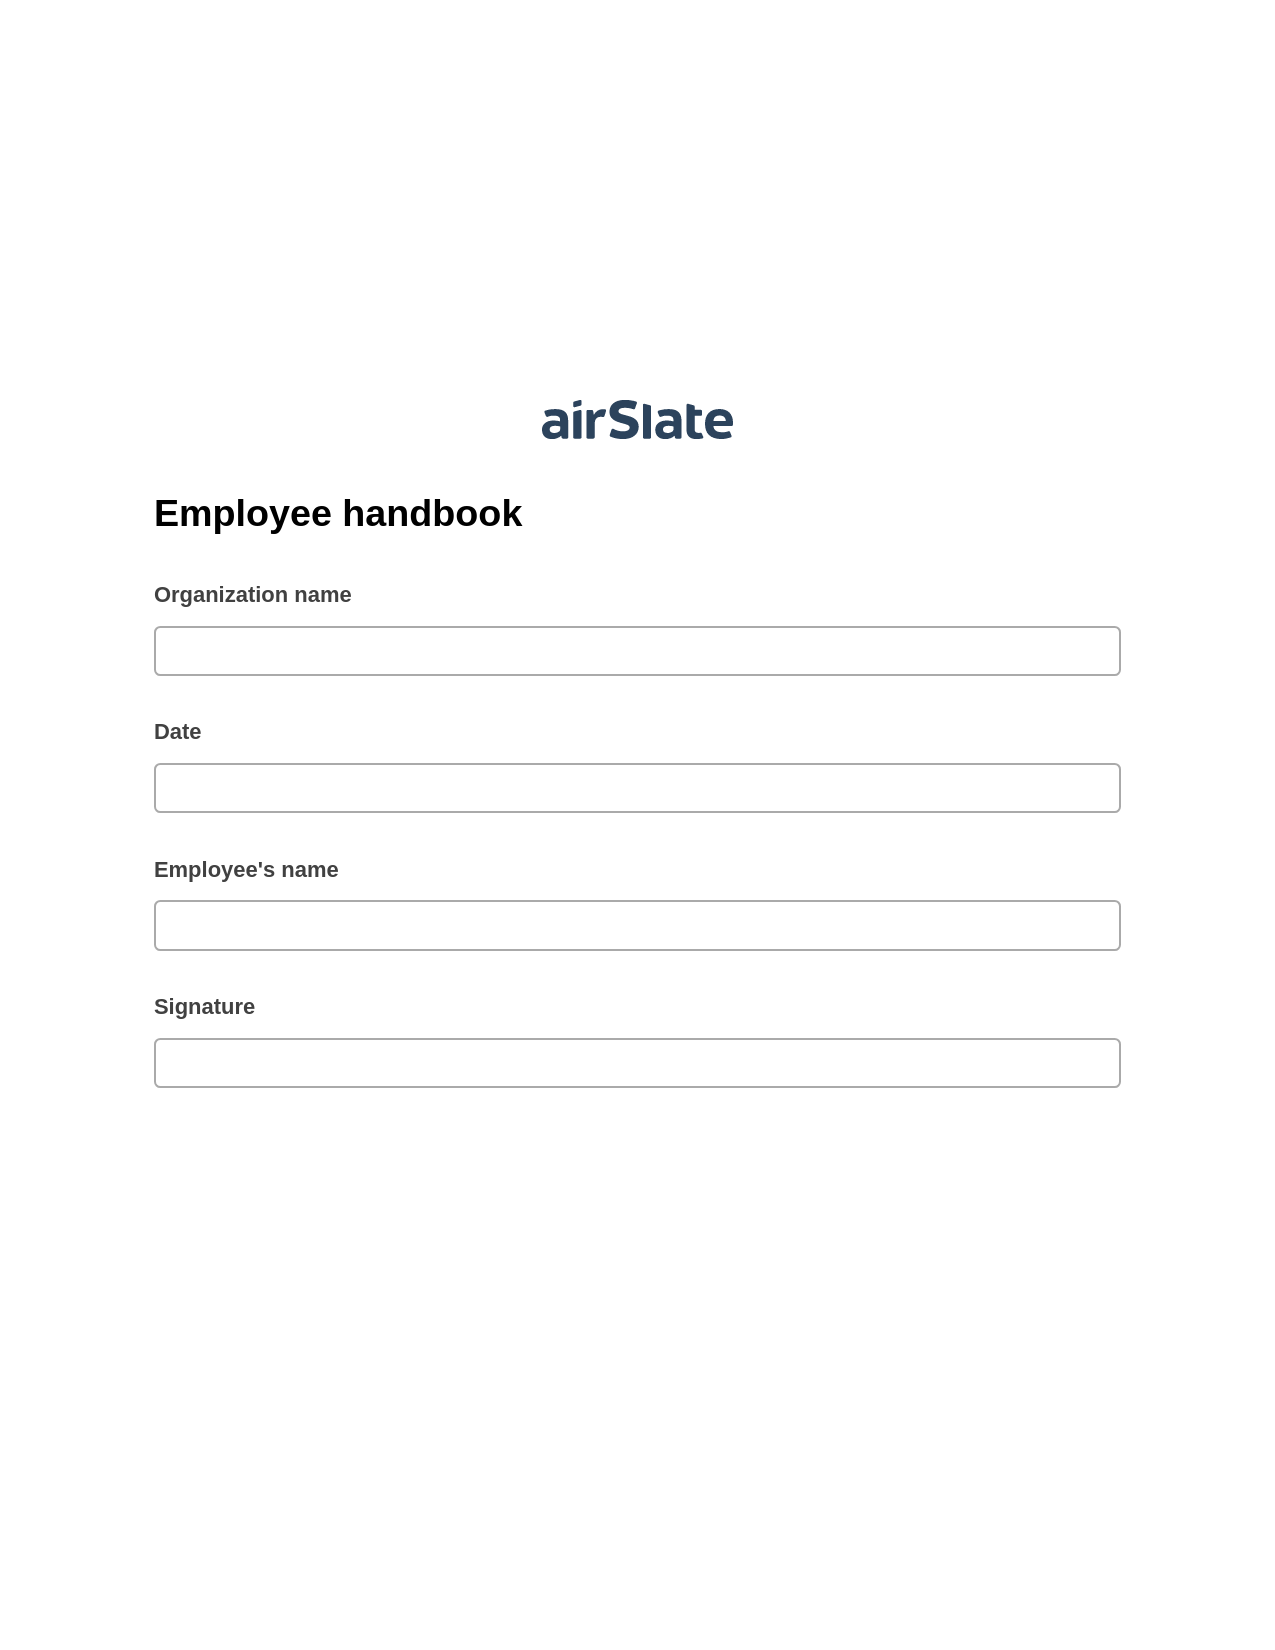 Employee handbook Pre-fill from Salesforce Record Bot, Slack Notification Bot, OneDrive Bot